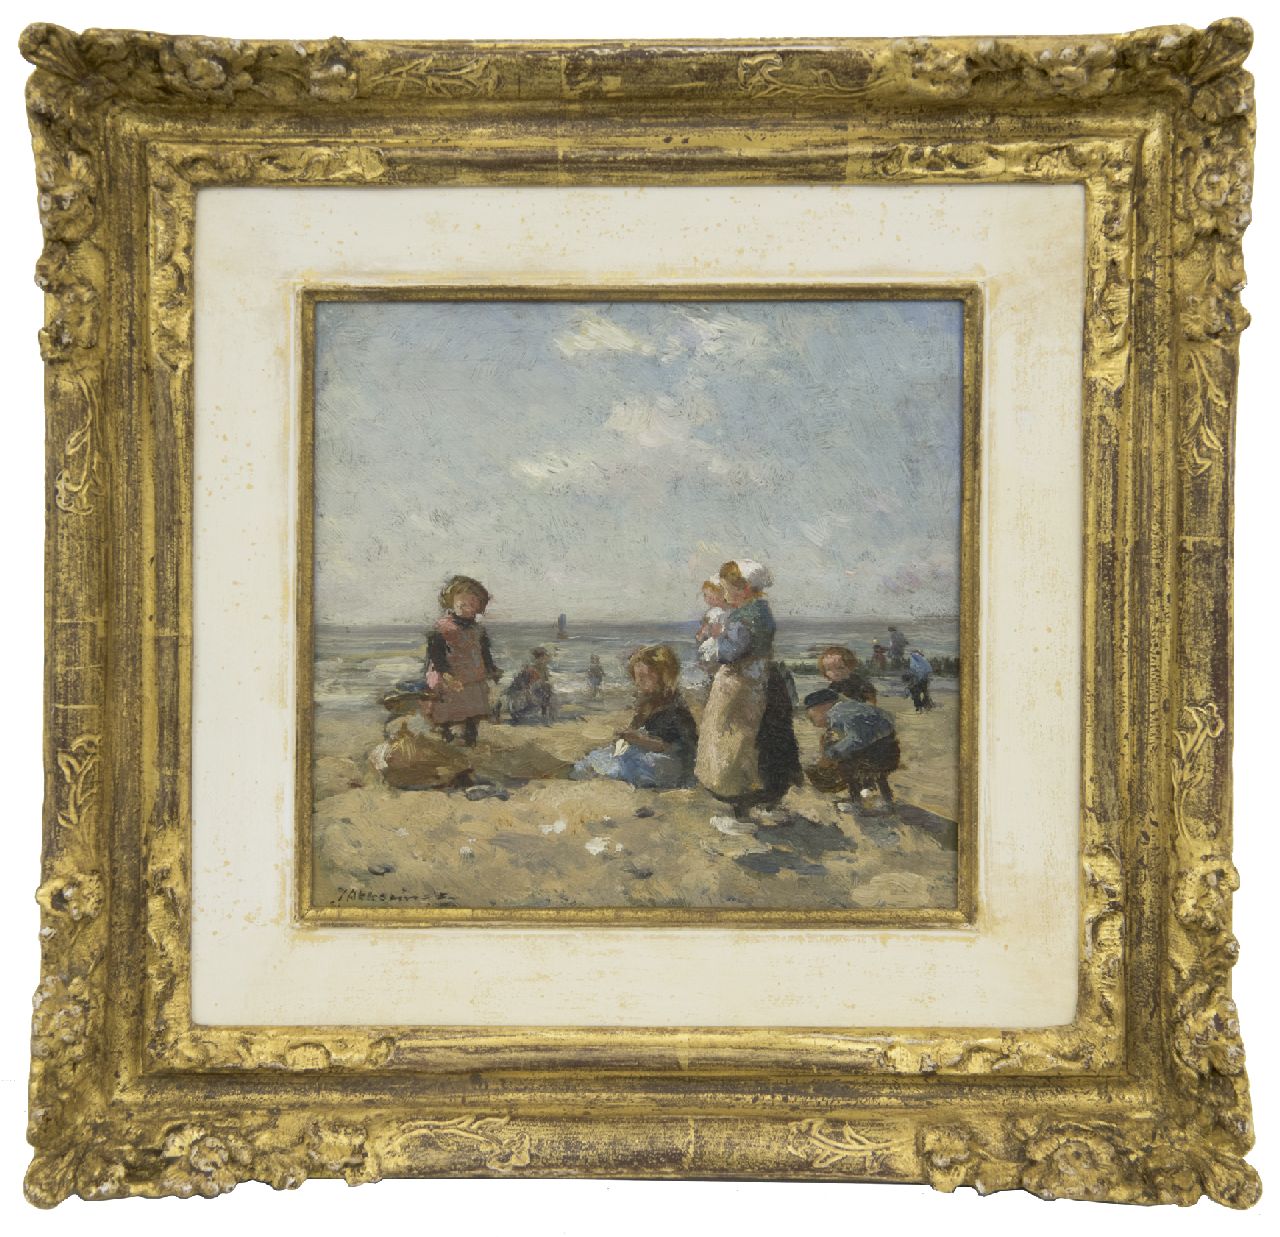 Akkeringa J.E.H.  | 'Johannes Evert' Hendrik Akkeringa, Children playing on the beach at Scheveningen, oil on panel 16.3 x 16.8 cm, signed l.l.